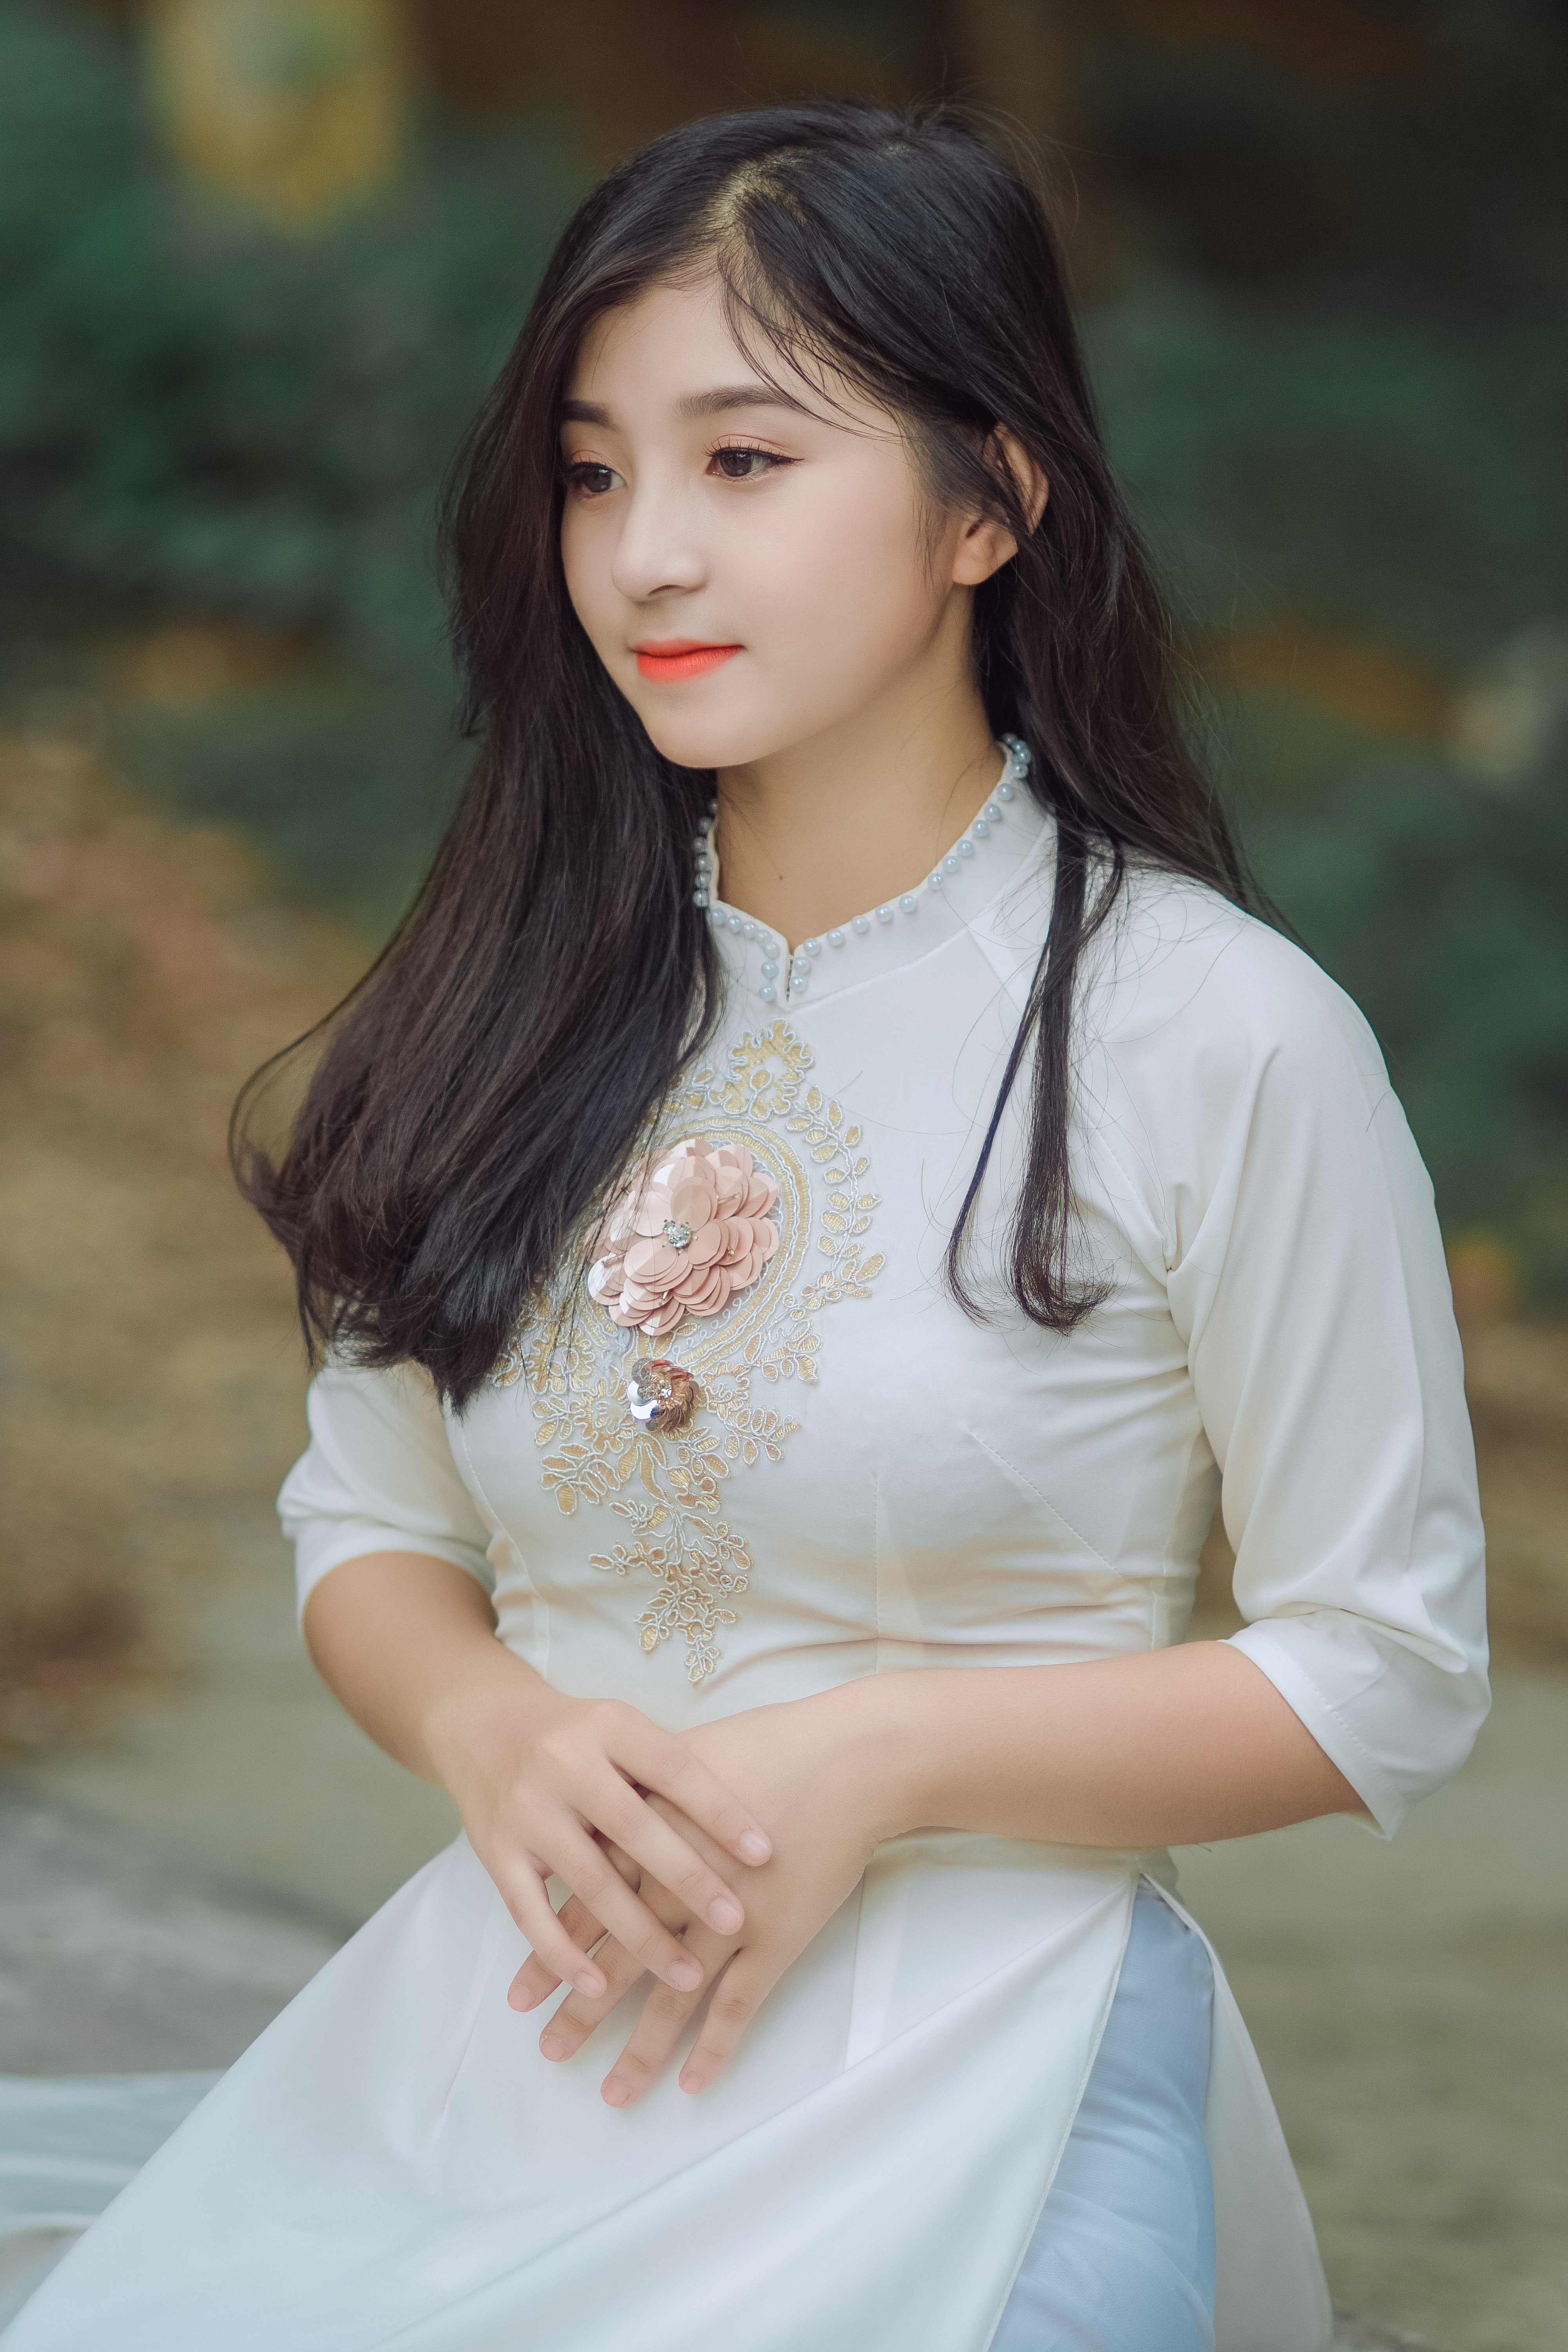 Young Vietnamese girl. | Source: Pixabay